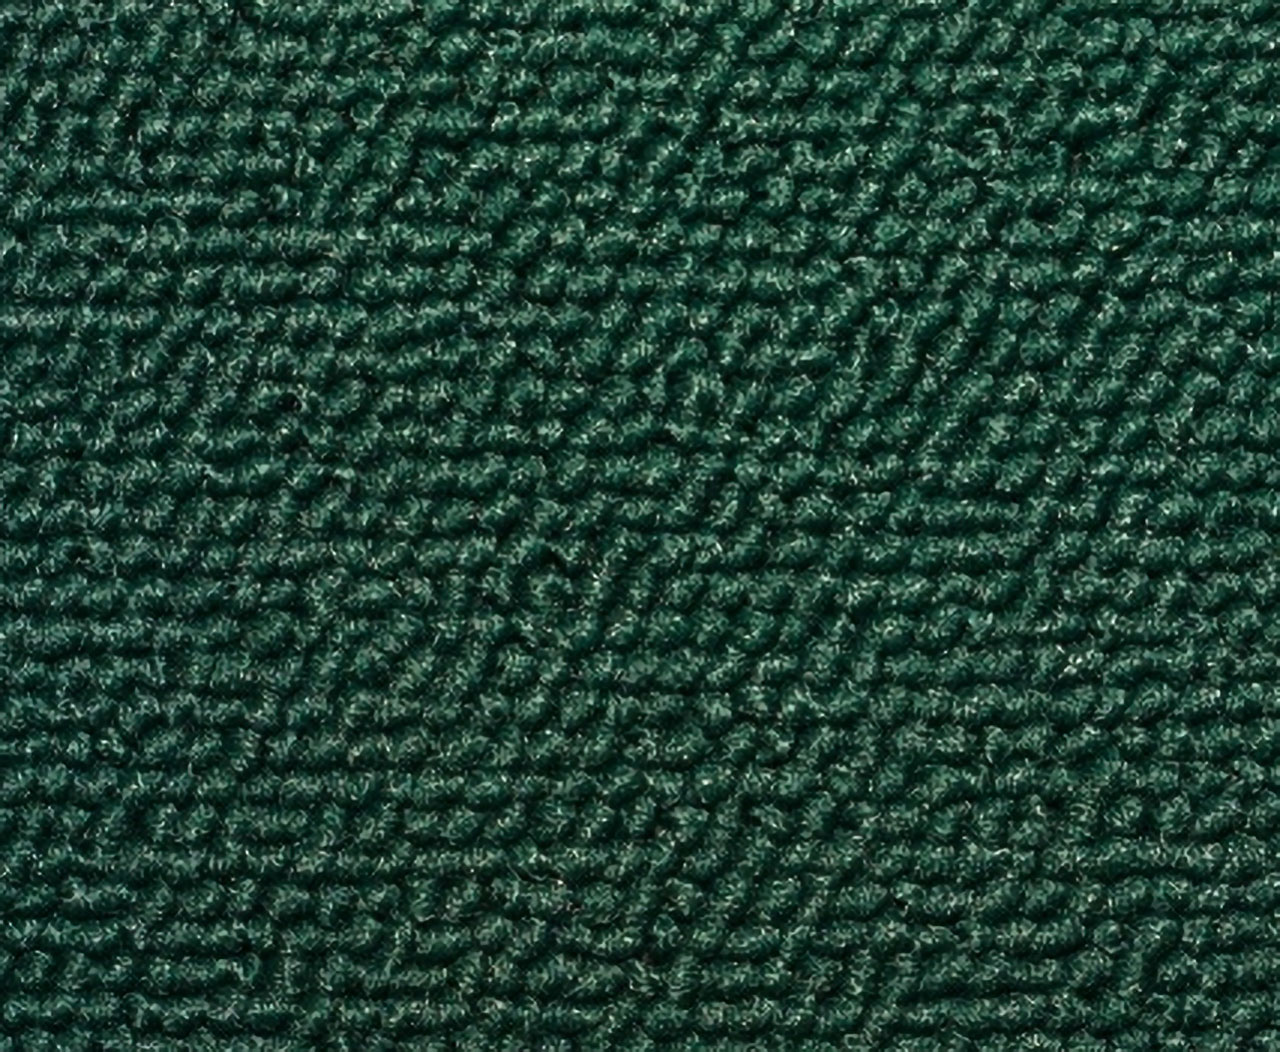 Holden Standard EH Standard Sedan C19 Triton Green Carpet (Image 1 of 1)